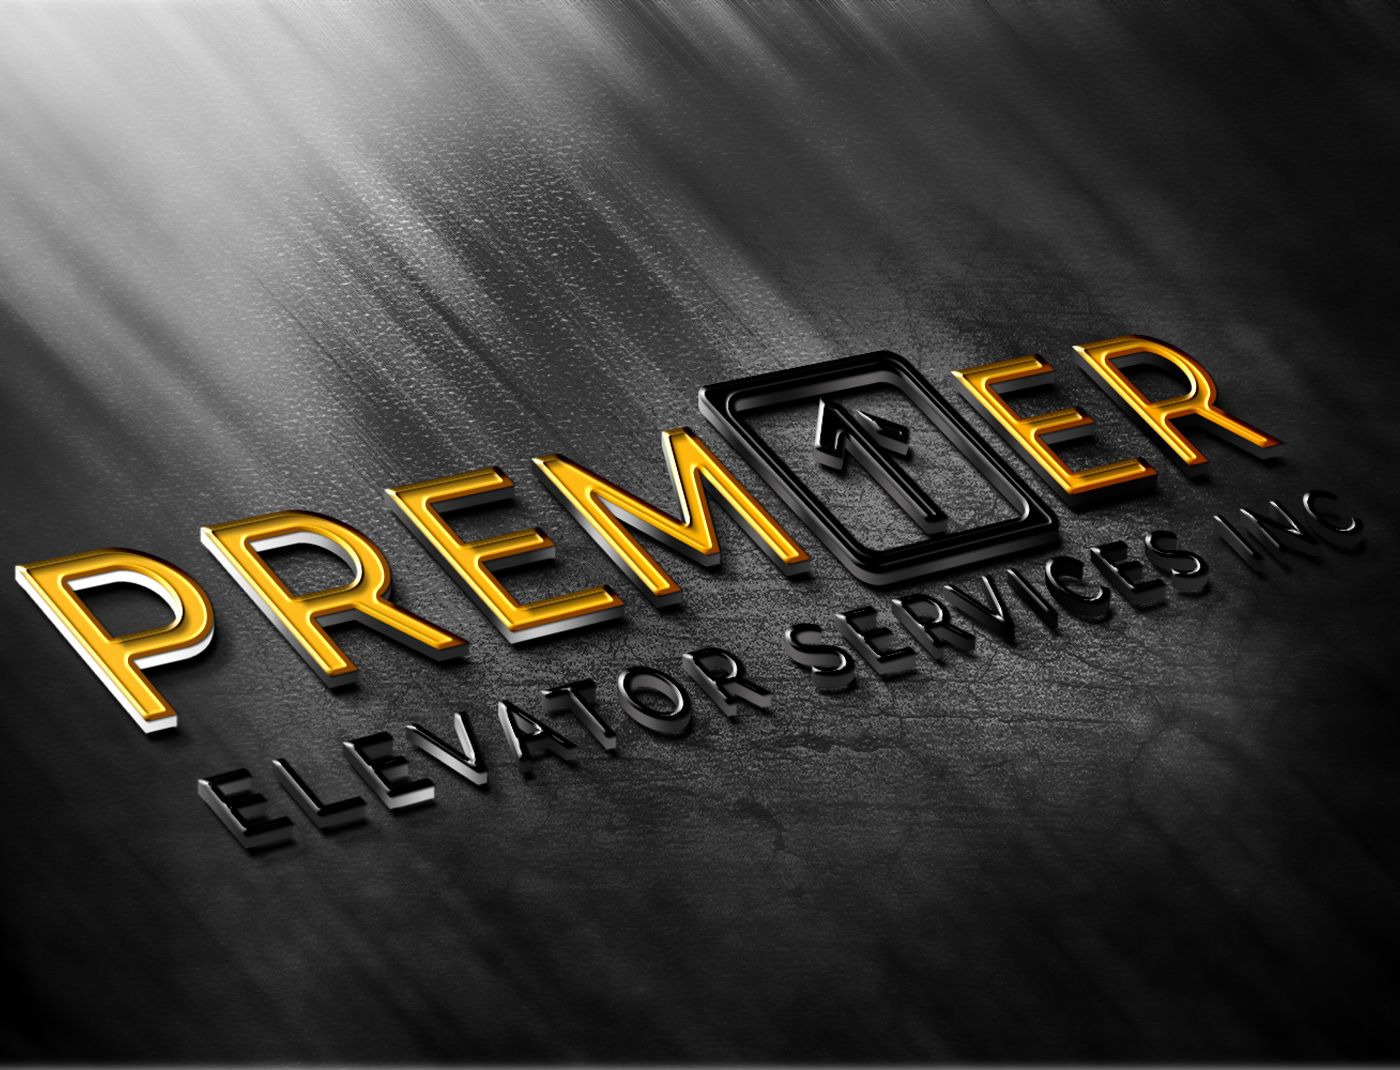 Premier Elevator Services